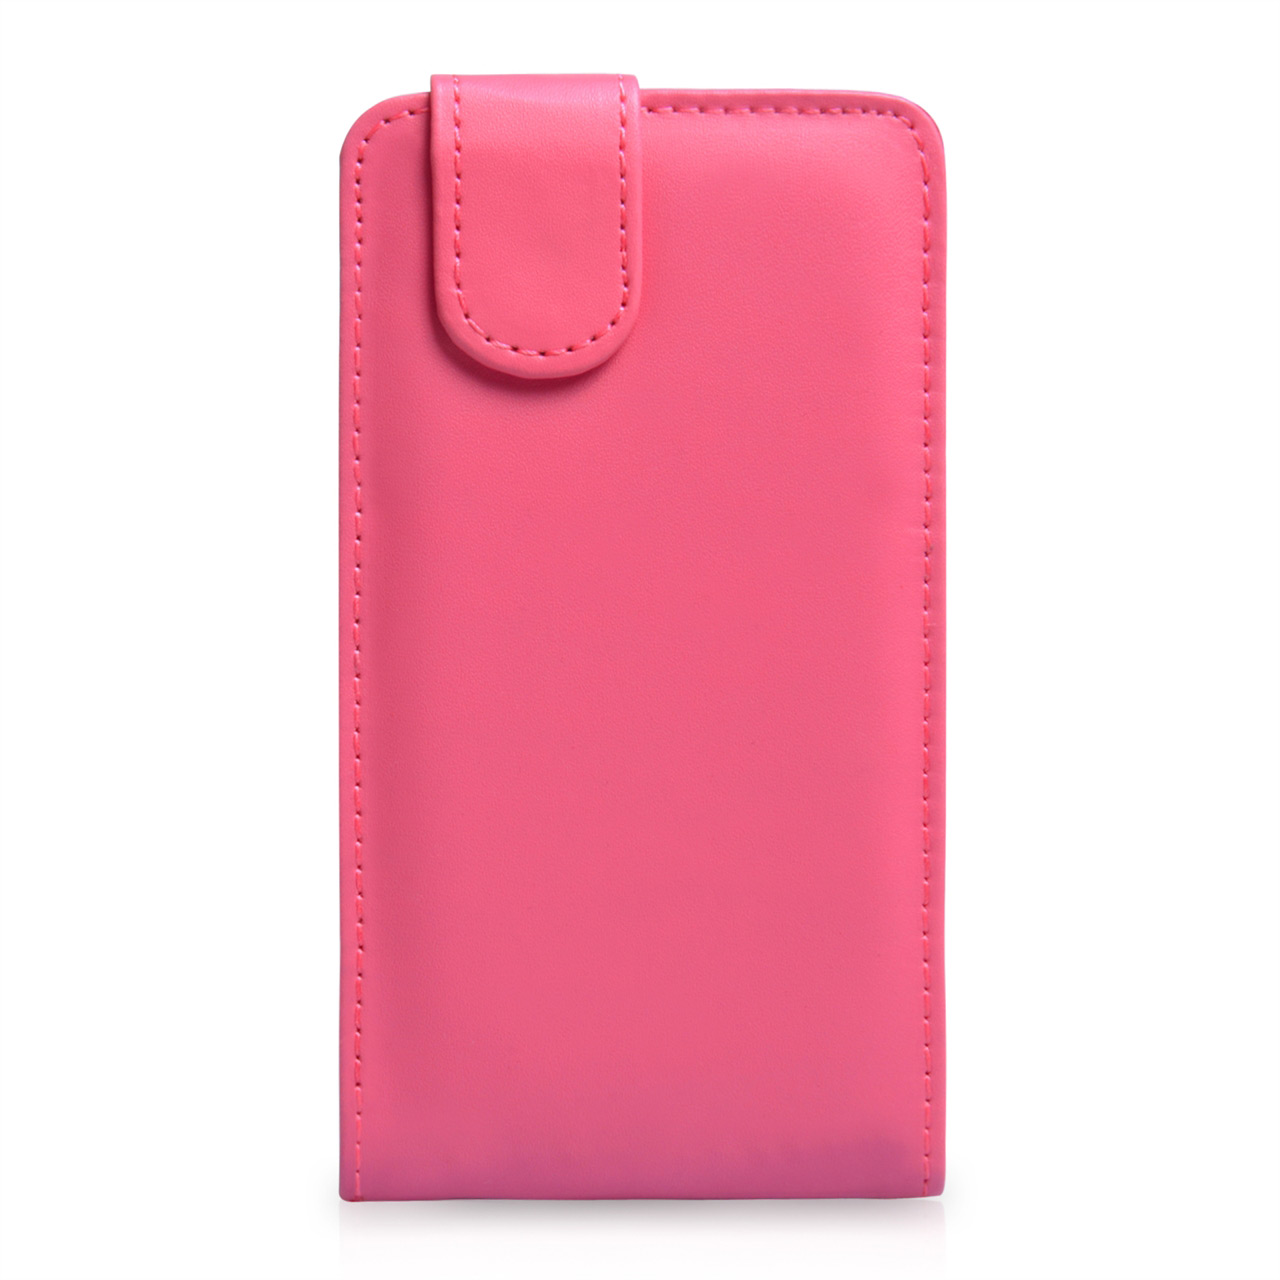 Nokia Lumia 925 Leather-Effect Flip Case - Hot Pink